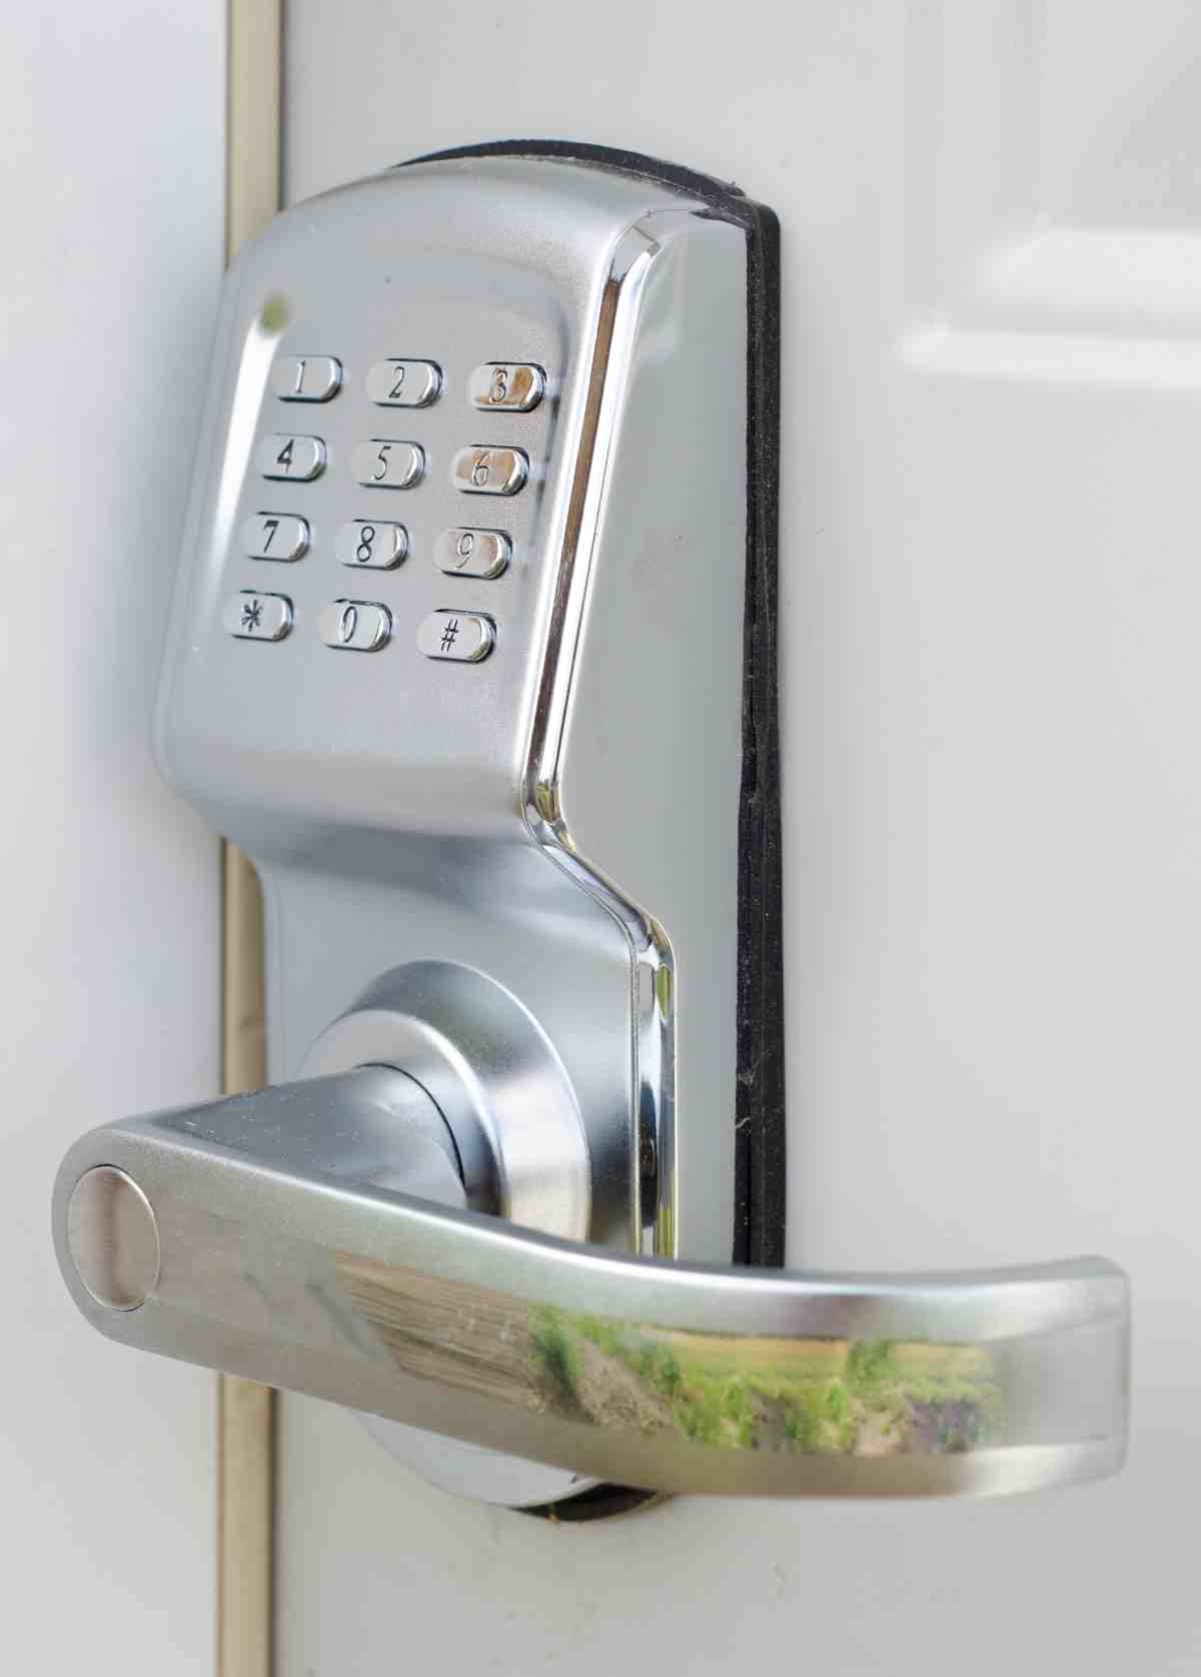 image showing a safe door lock